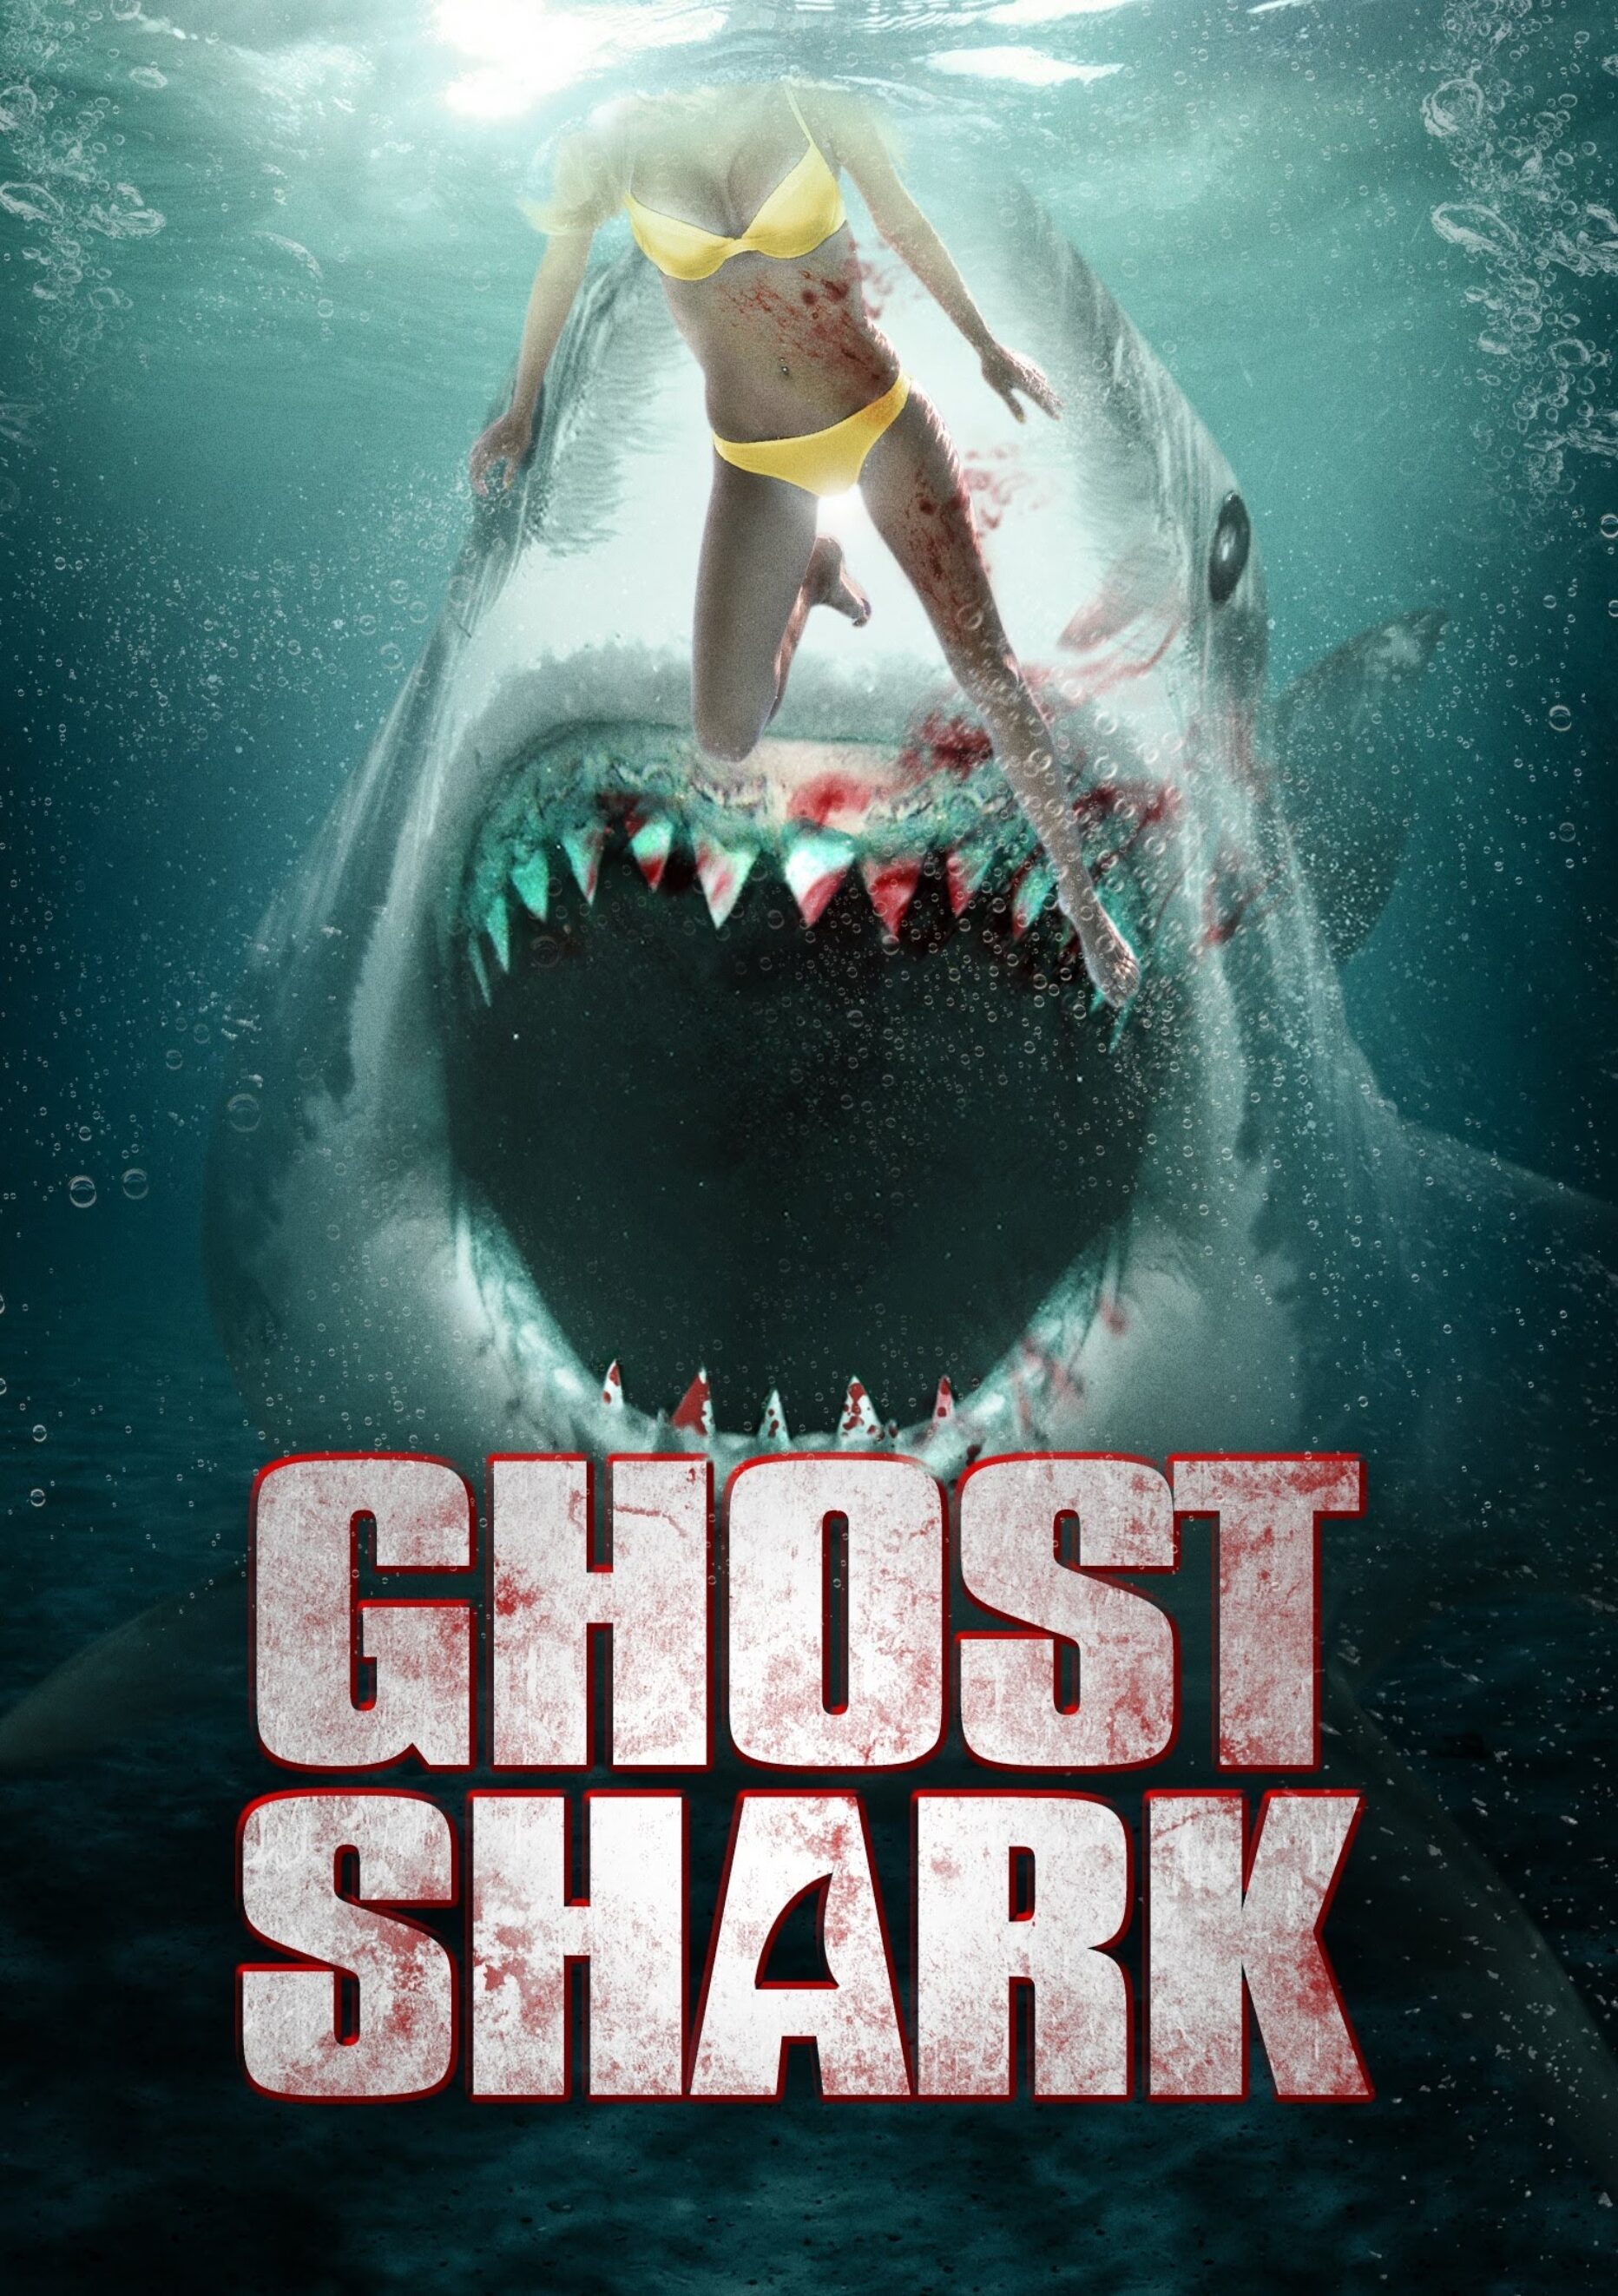 Saturday is Sharkday #3: Ghost Shark